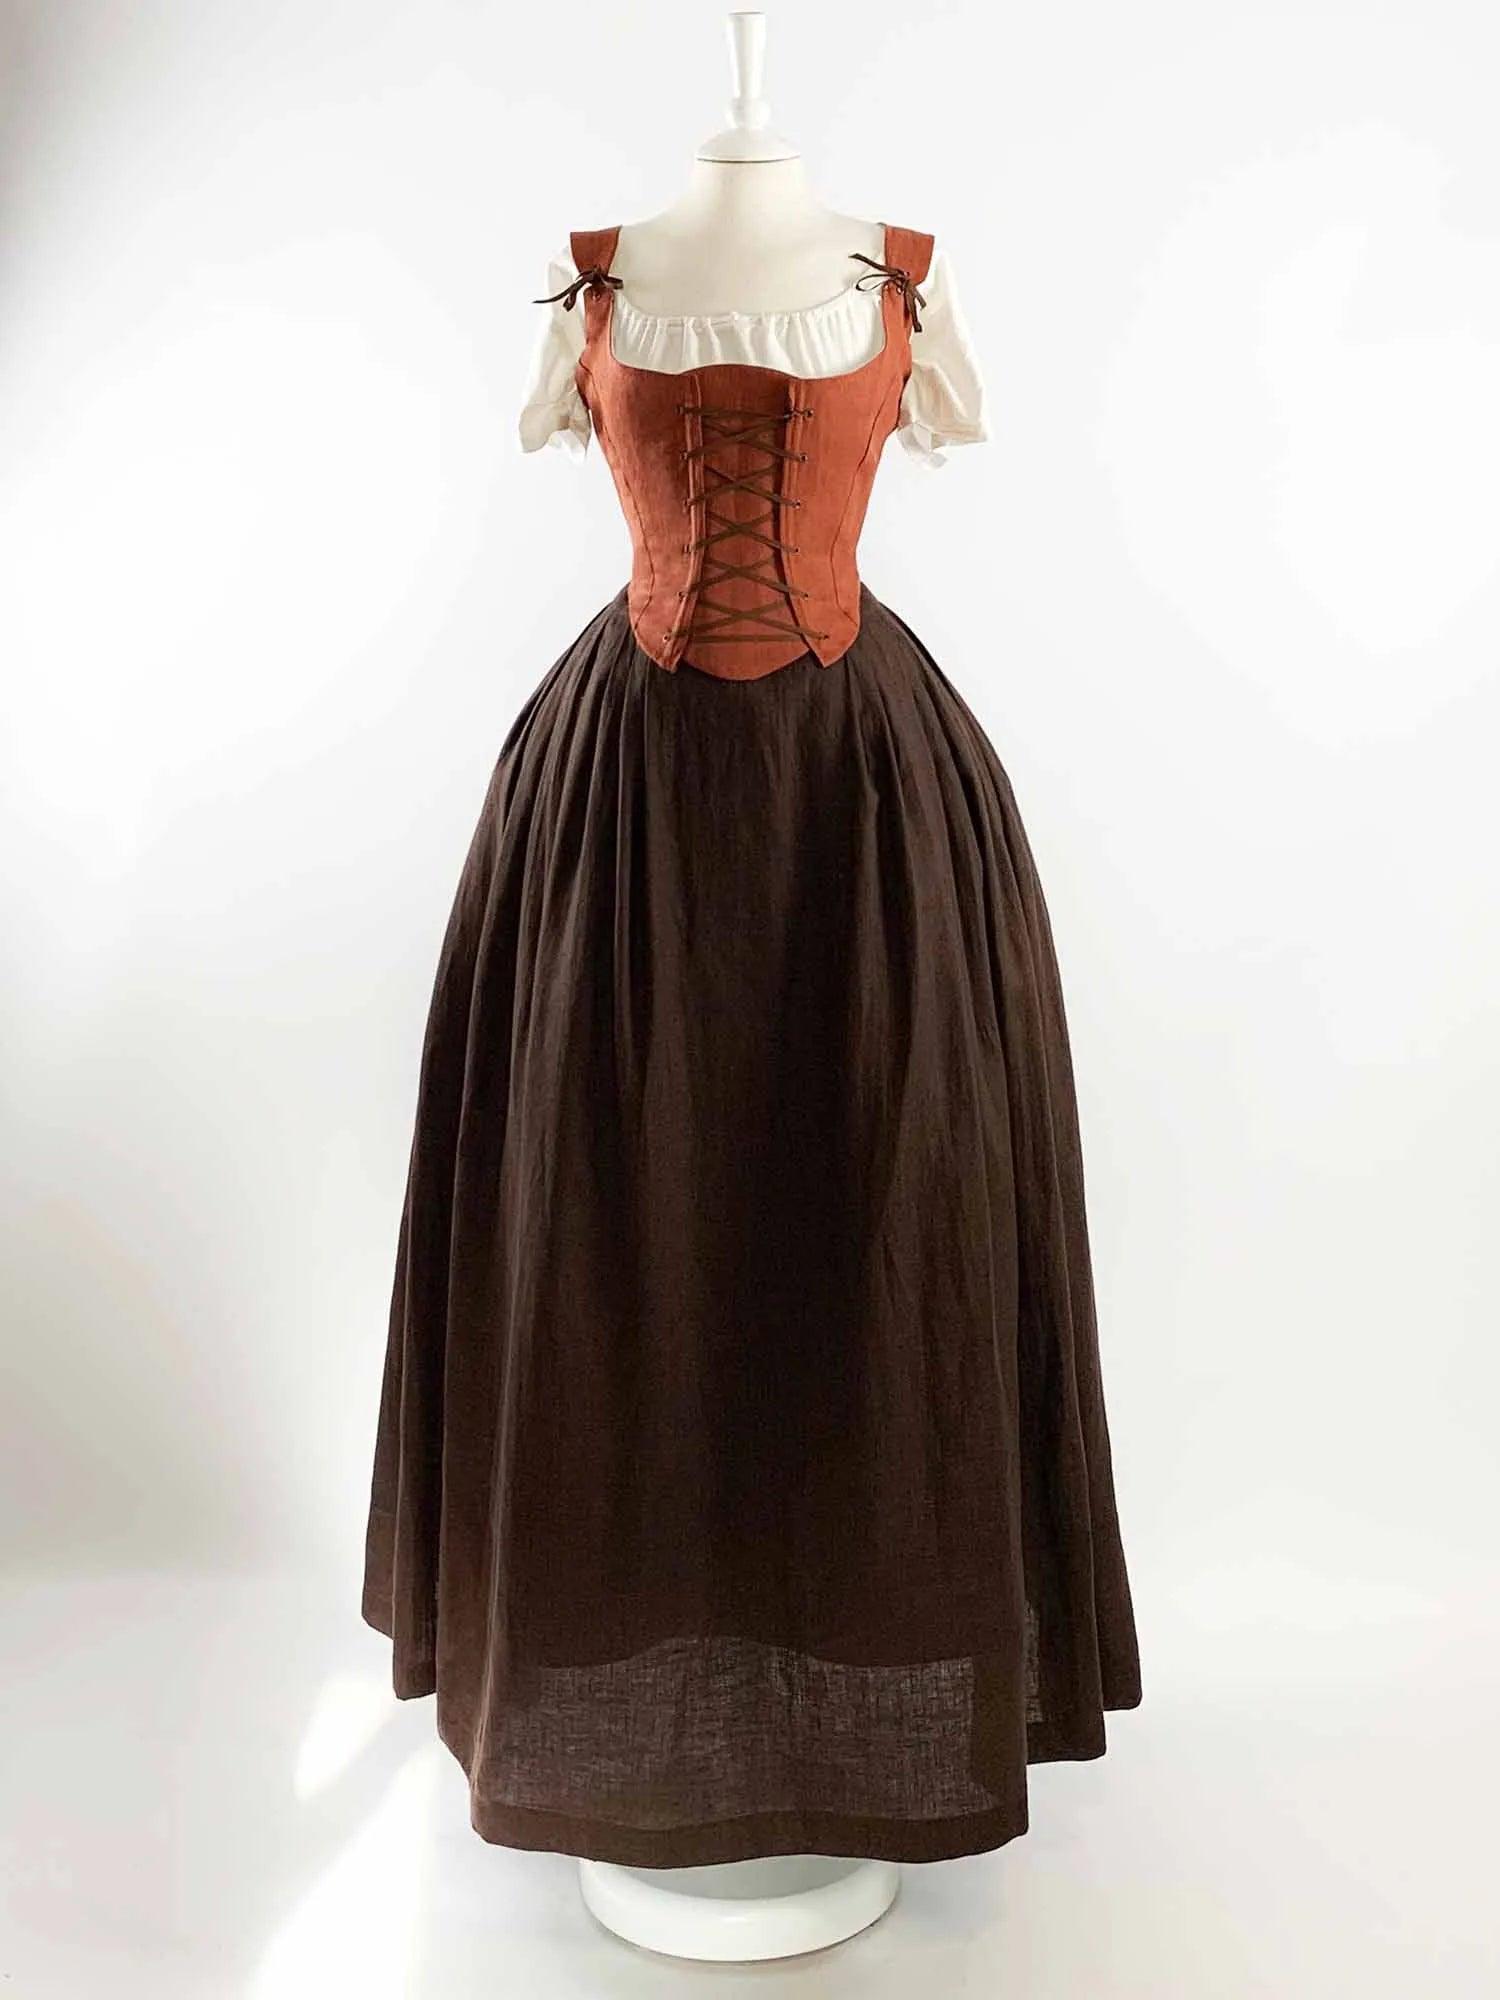 ISOLDE, Renaissance Costume in Rust Orange &amp; Chocolate Linen - Atelier Serraspina - Costume renaissance en Lin Terre de Sienne et Chocolat